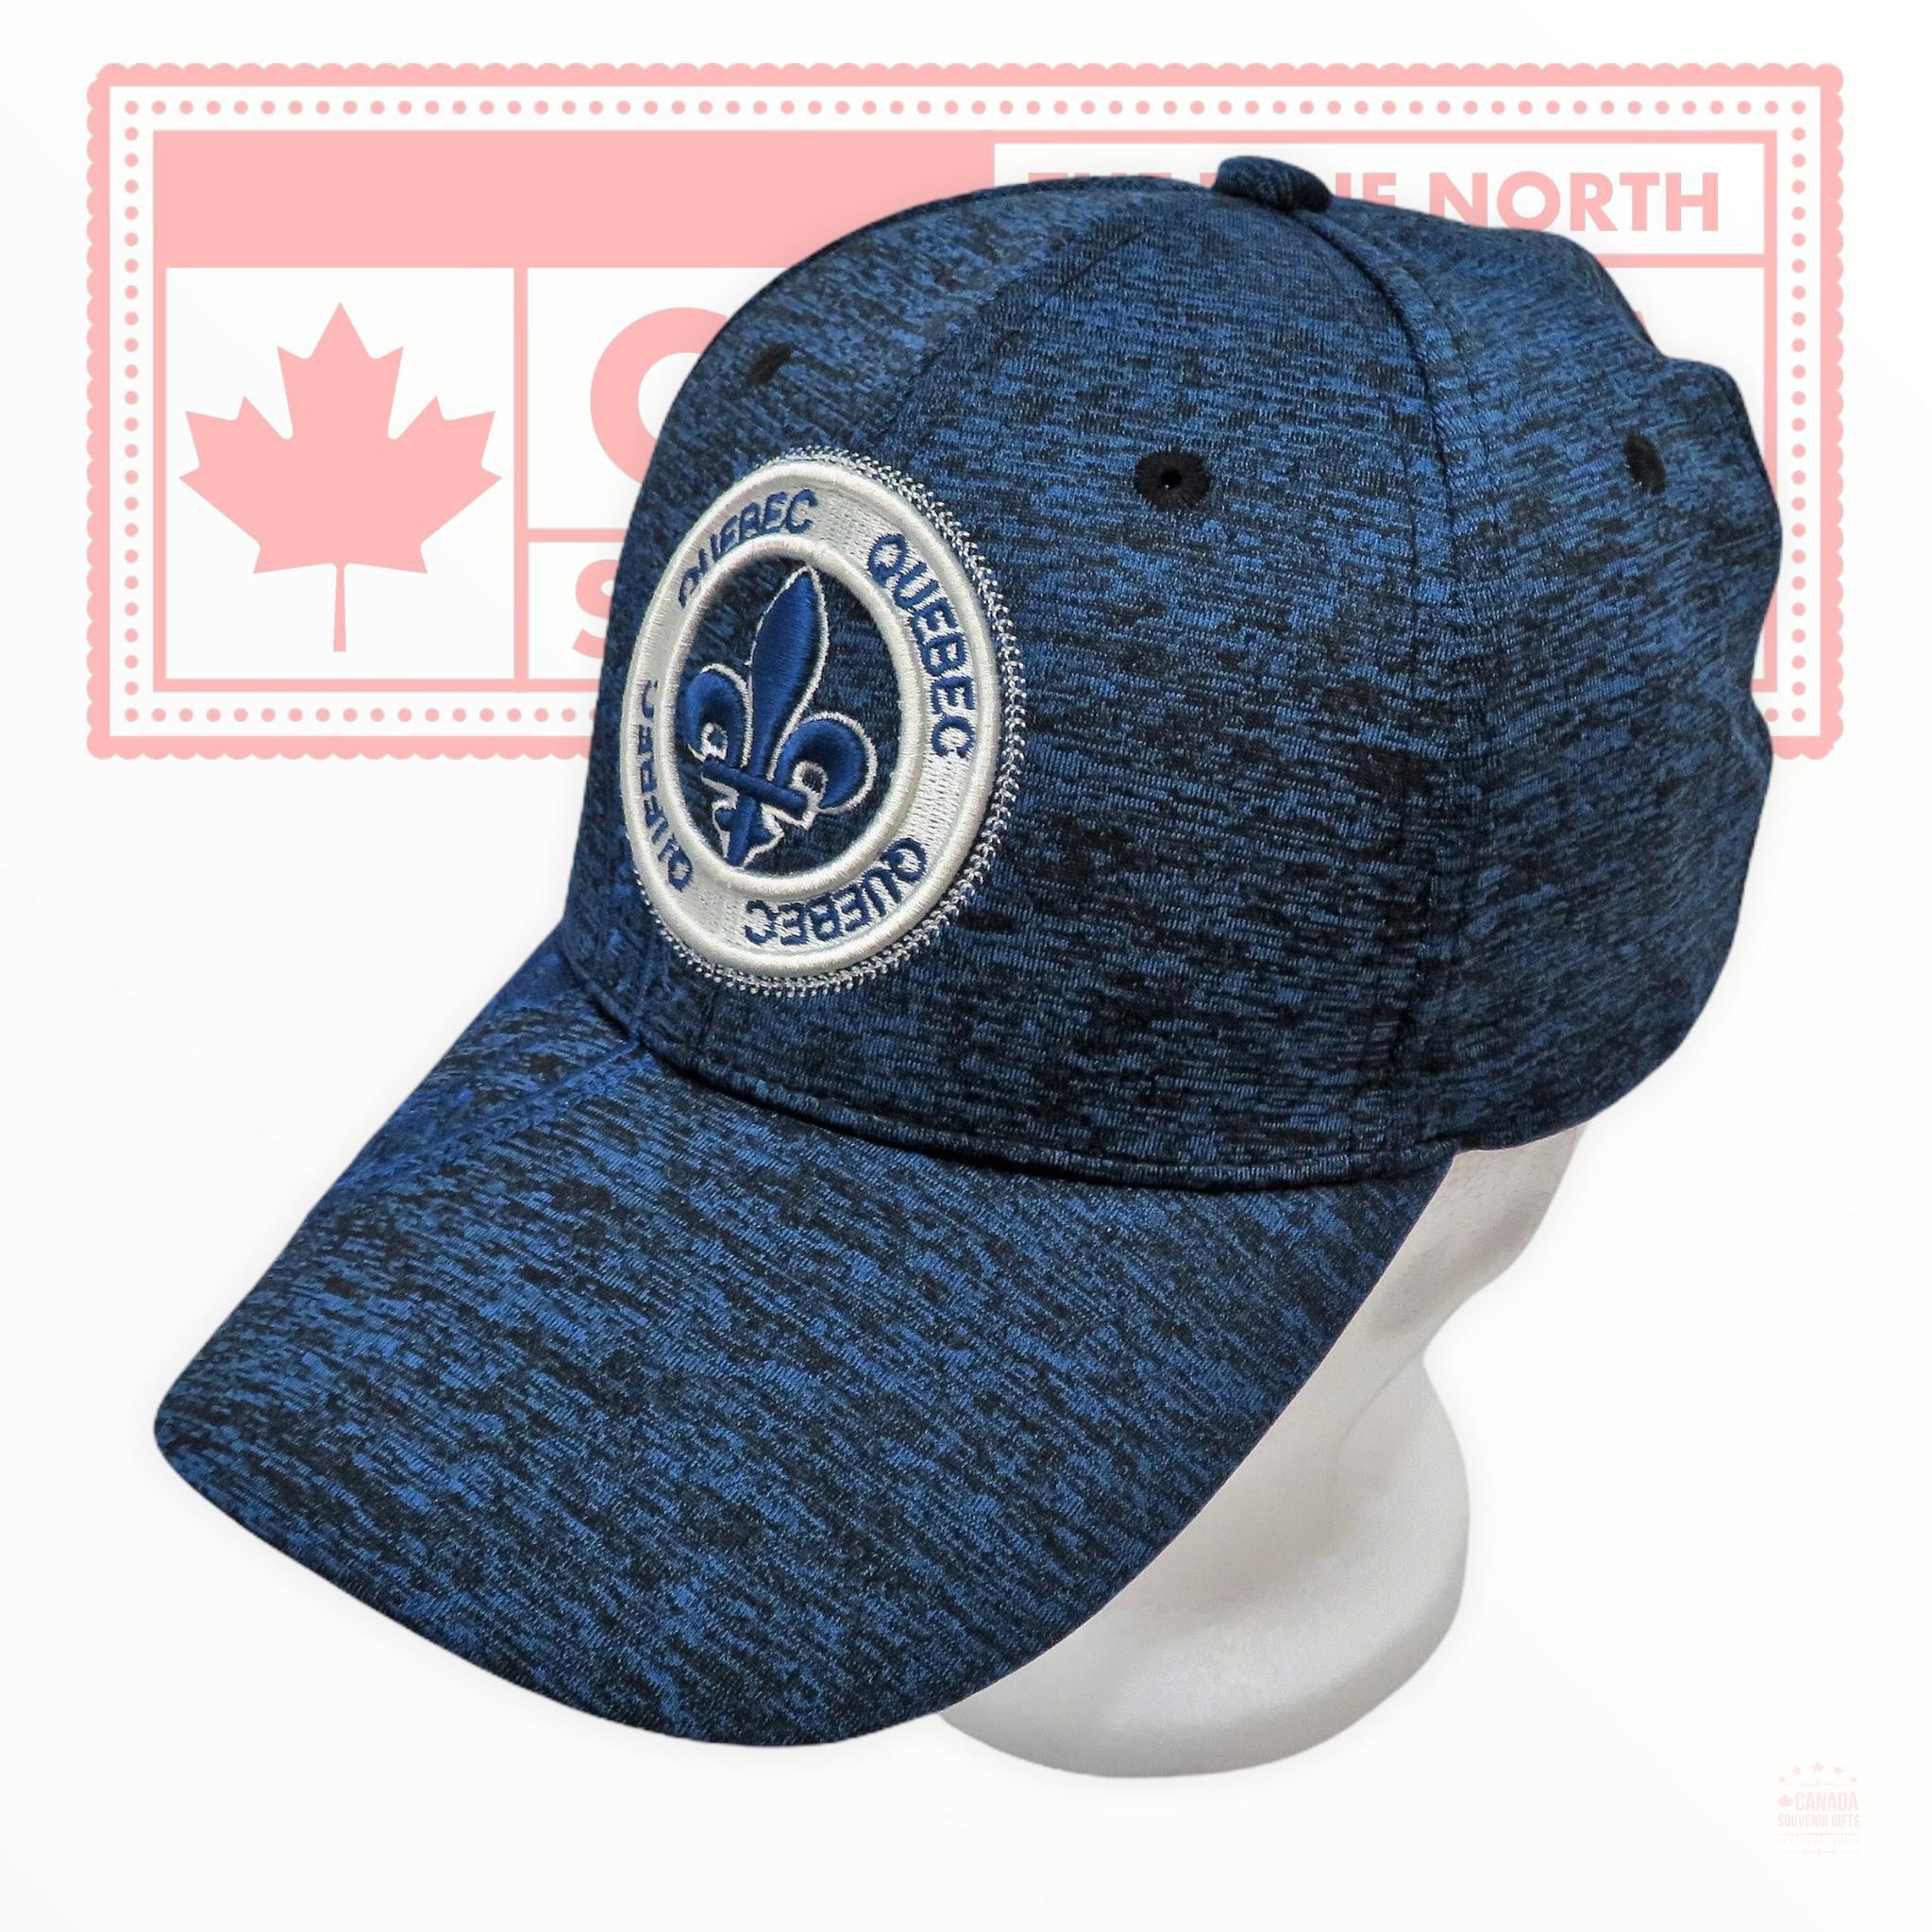 Quebec Fleur De Lys Blue Baseball Cap Hat Embroidery - Quebec Canada Souvenir Premium Quality